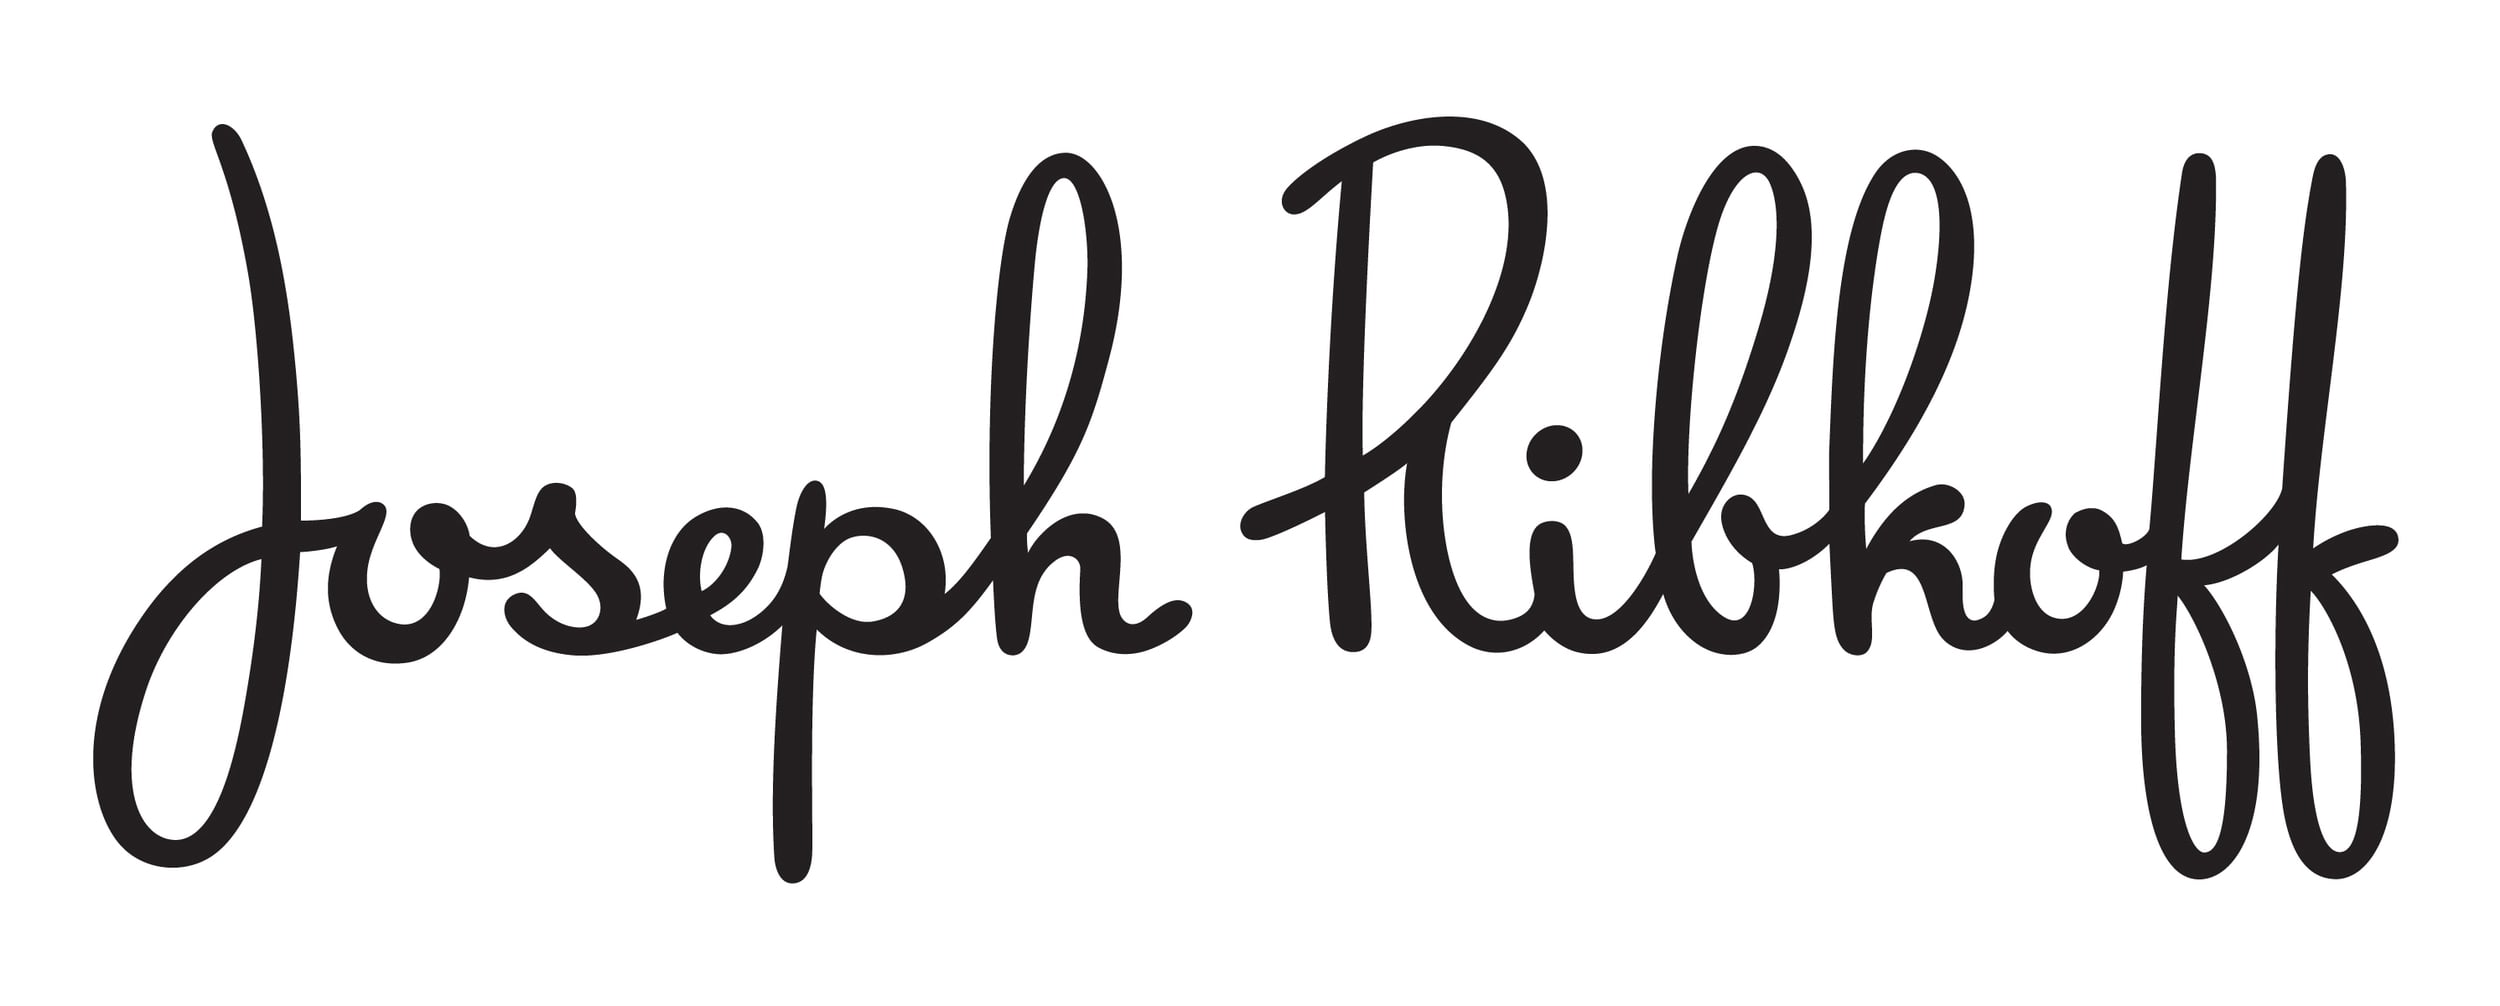 Joseph-Ribkoff-Logo-new.jpg